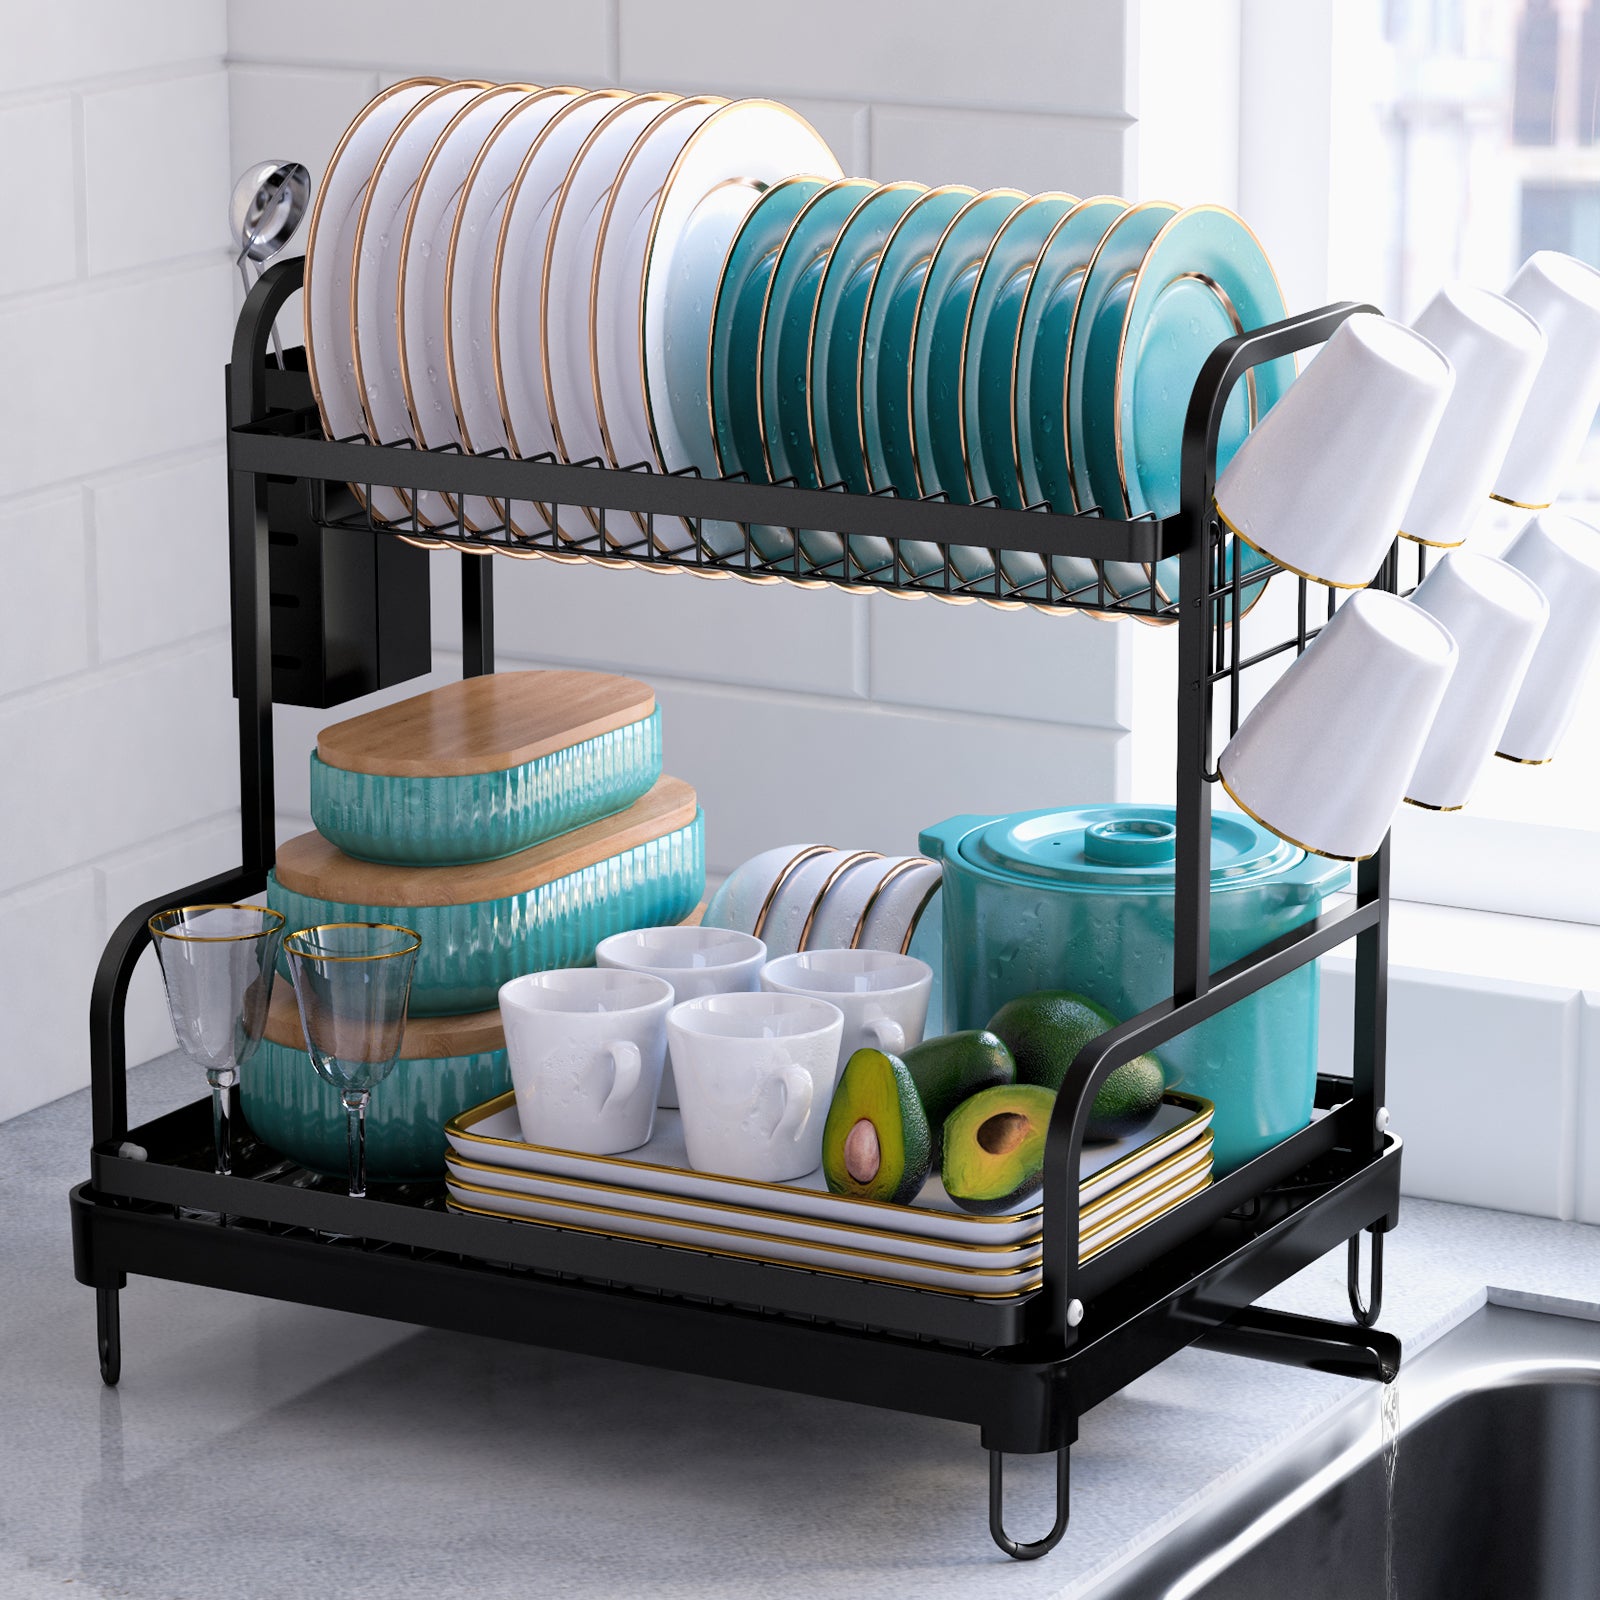 Kitsure Dish Drying Rack, Multifunctional Dish Rack, Rustproof Kitchen